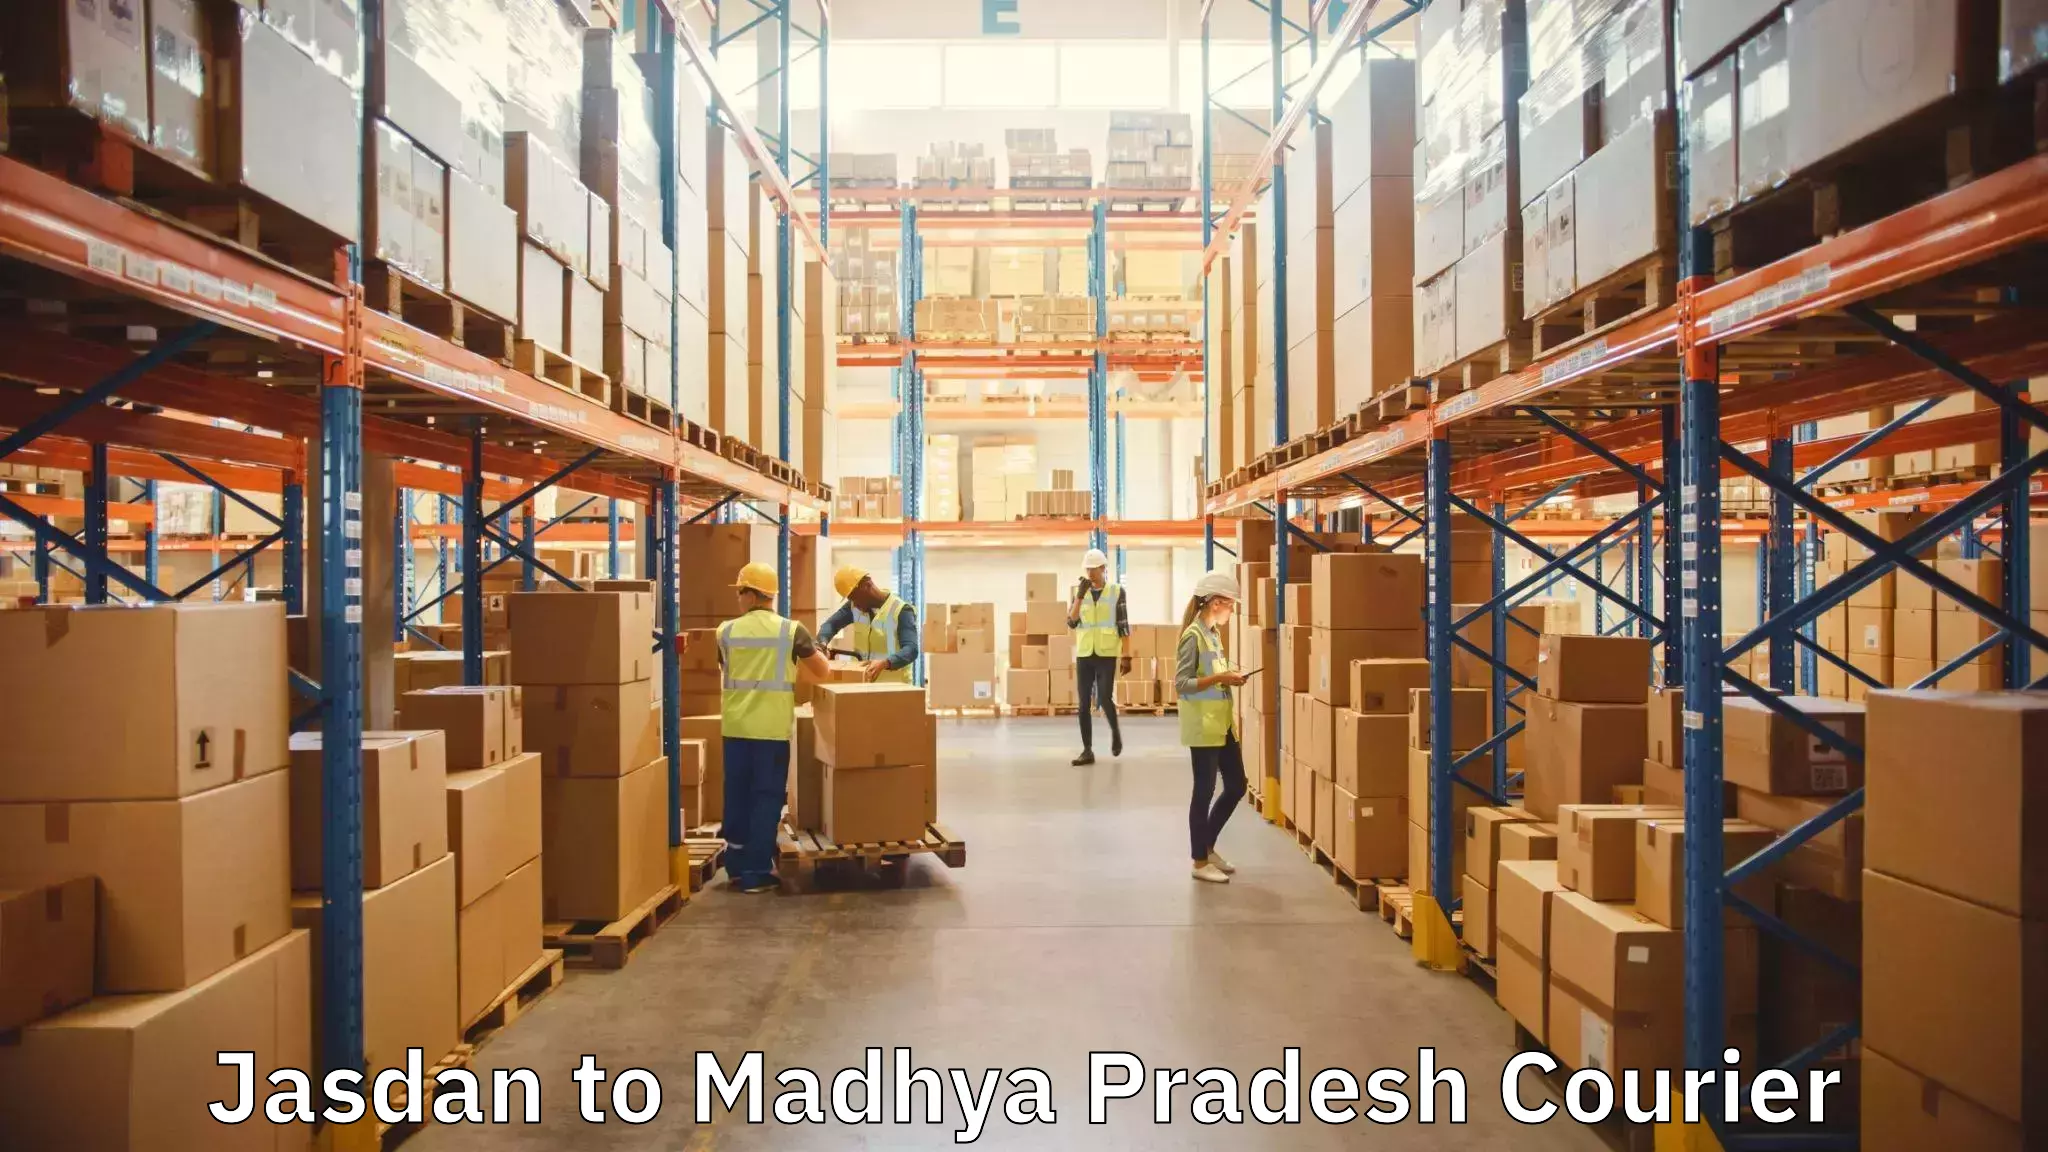 Professional moving company Jasdan to Madhya Pradesh